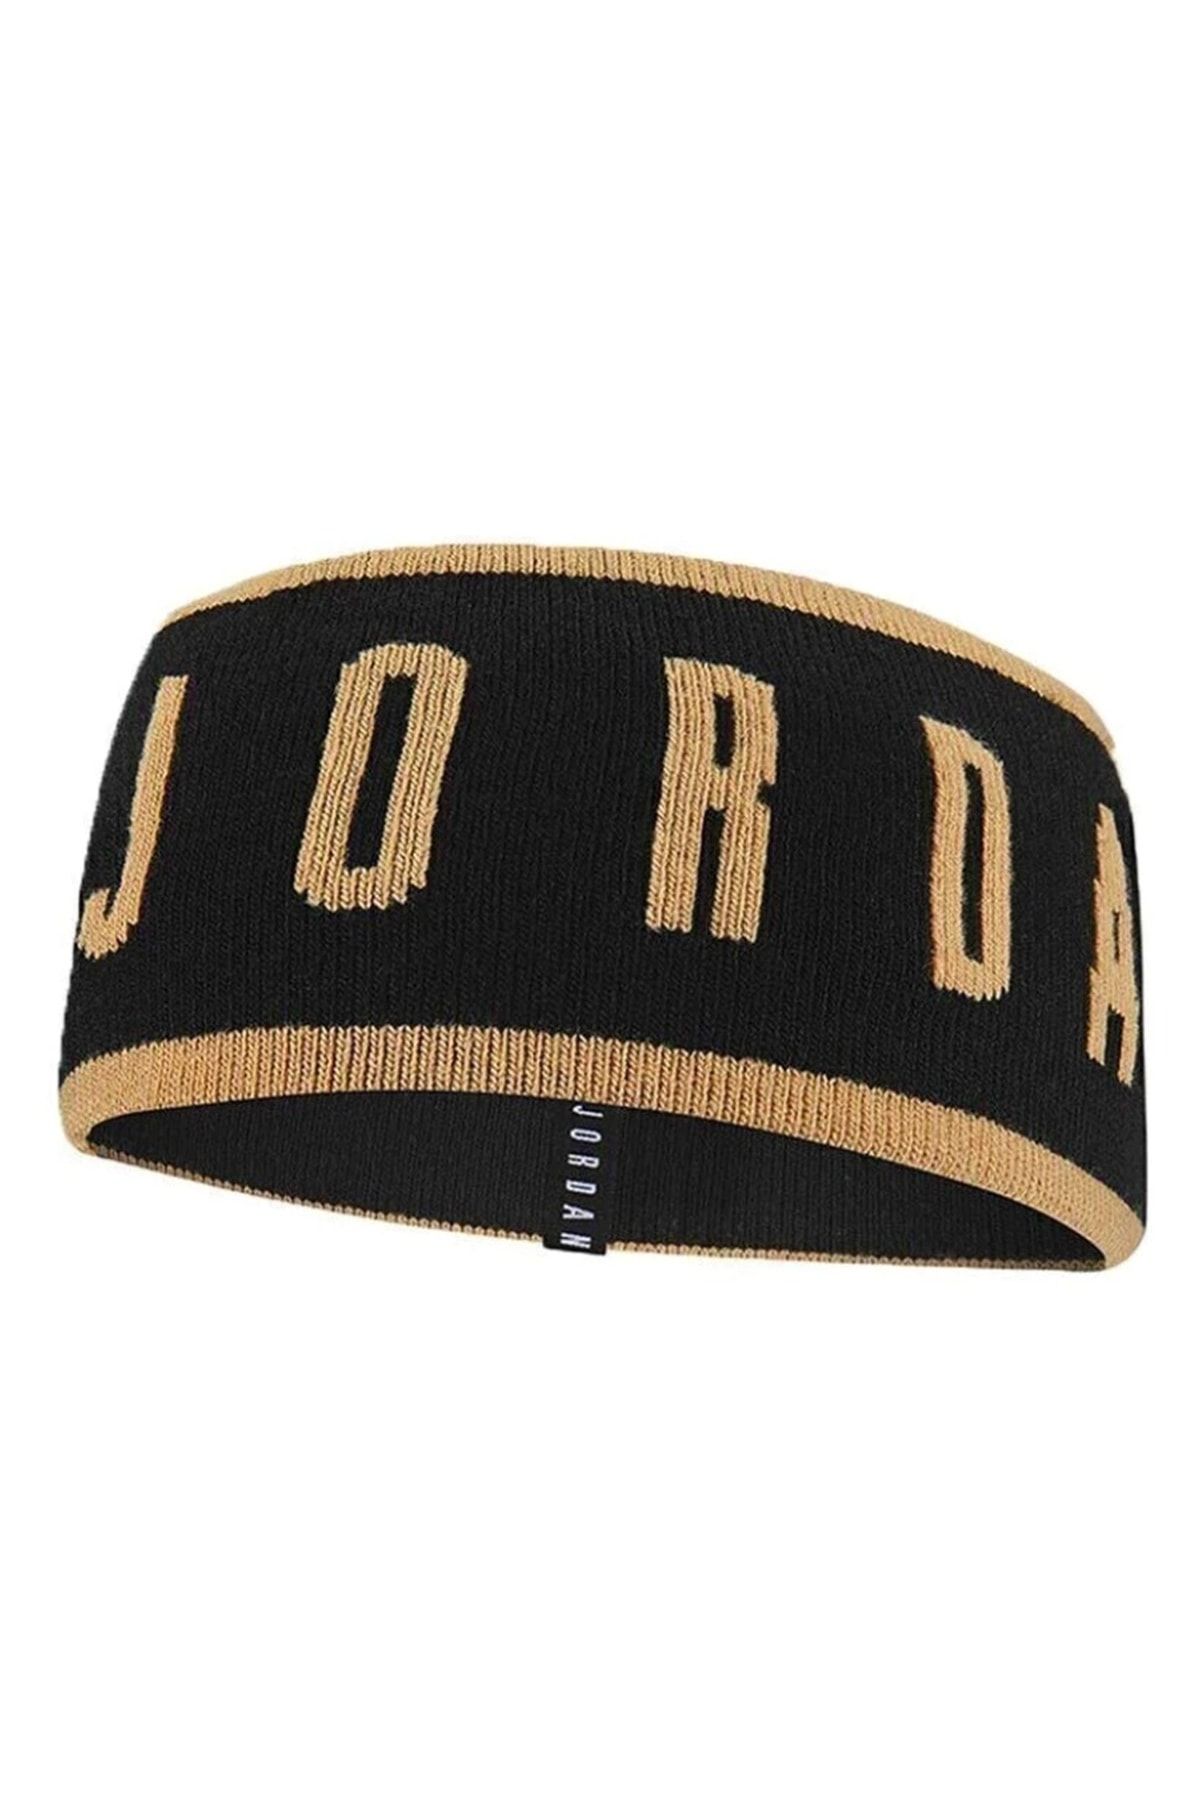 Nike Jordan Seamless Knit Nba Erkek Siyah Antrenman Saç Bandı J.100.2722.053.os